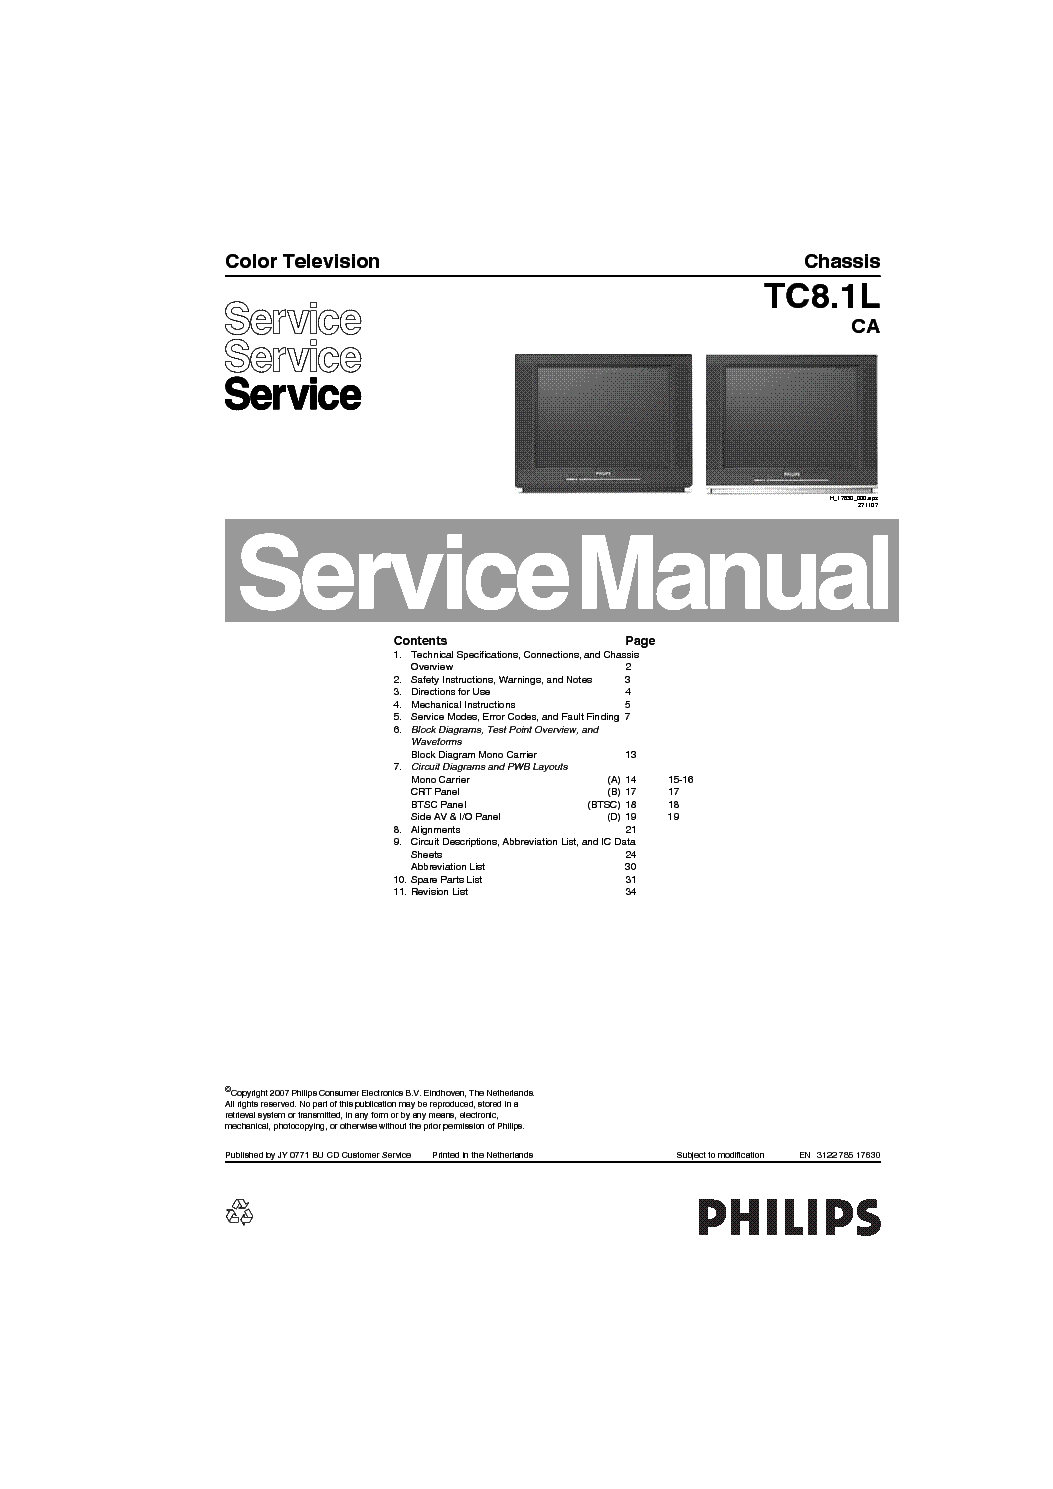 PHILIPS TC8.1L-CA service manual (1st page)